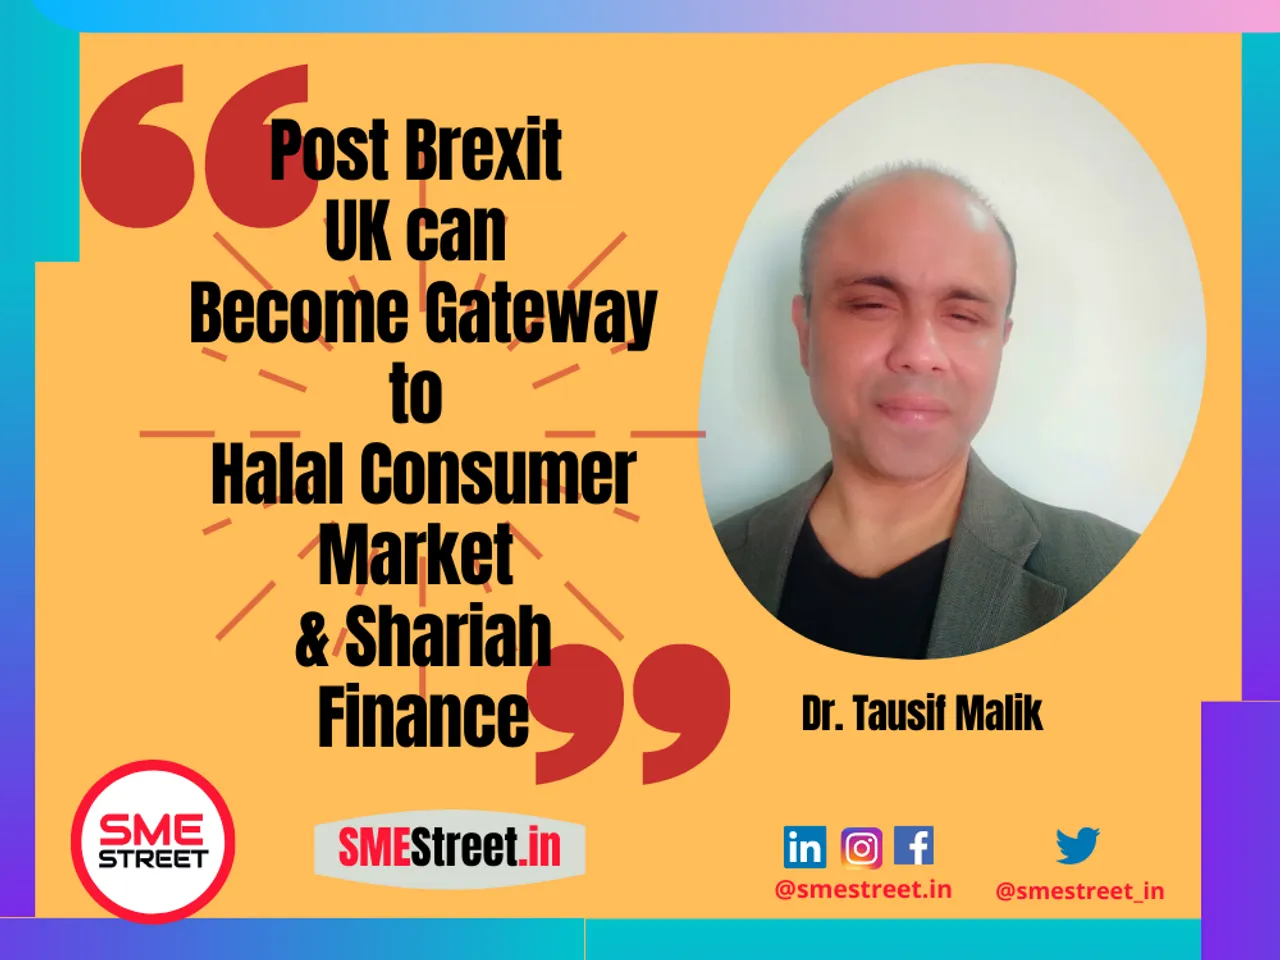 Halal Consumer MArket, Tausif Malik, SMEStreet